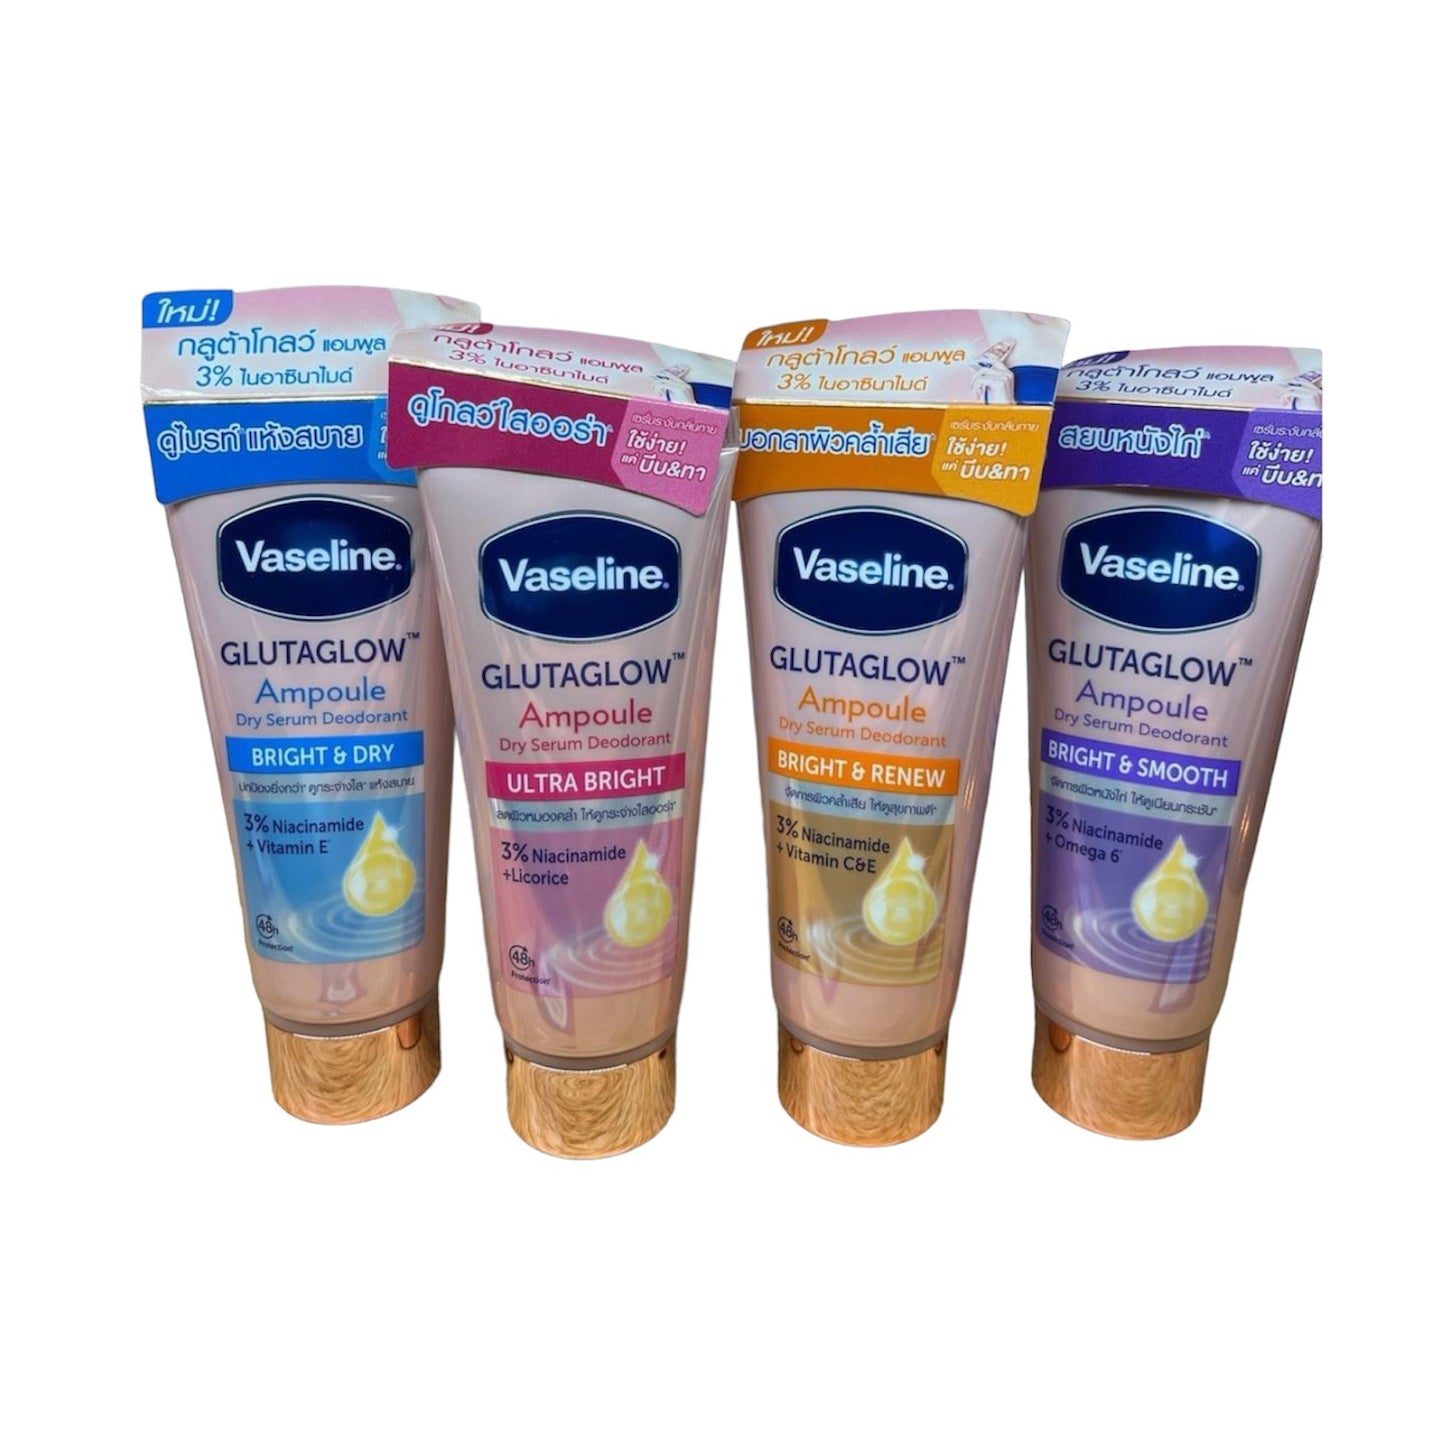 VASELINE - GLUTAGLOW Ampoule dry serum deodorant